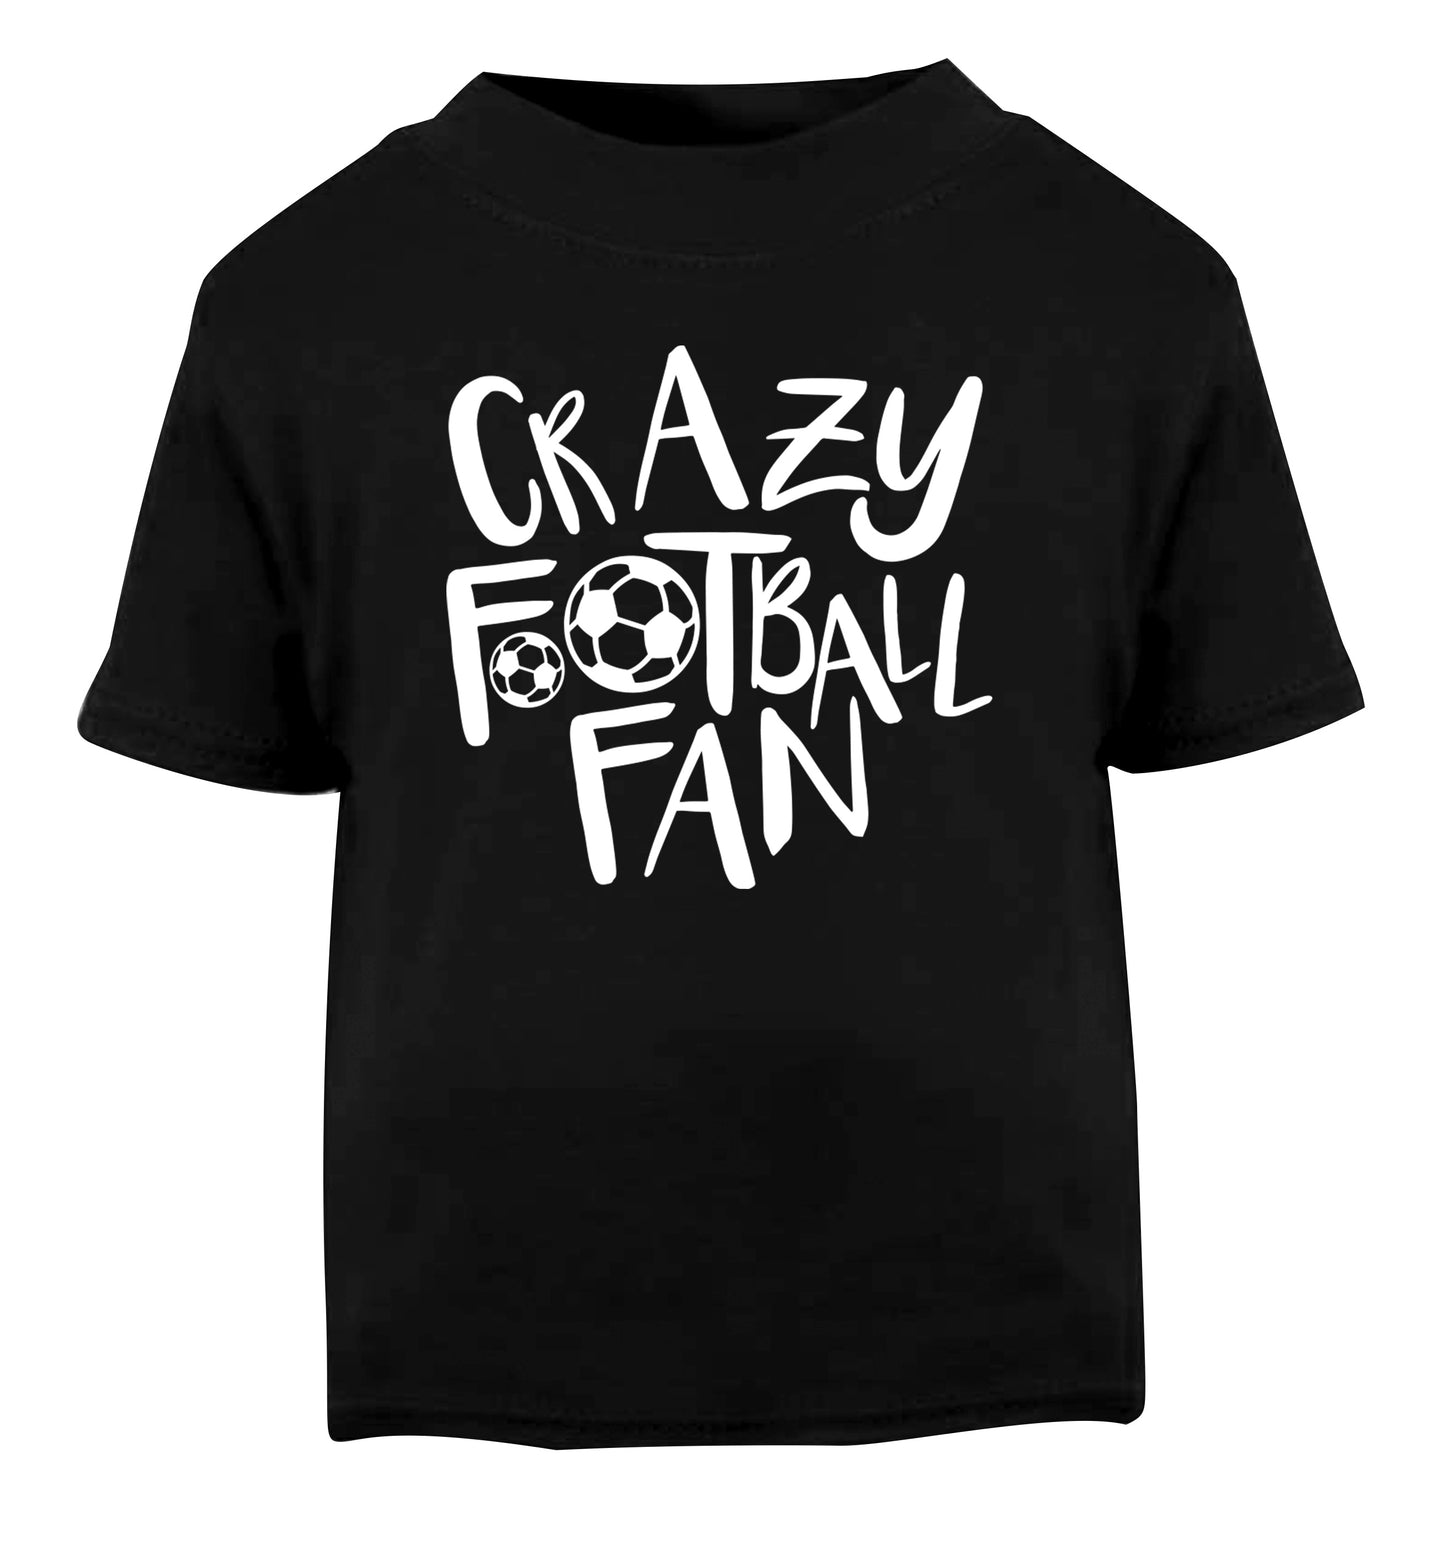 Crazy football fan Black Baby Toddler Tshirt 2 years